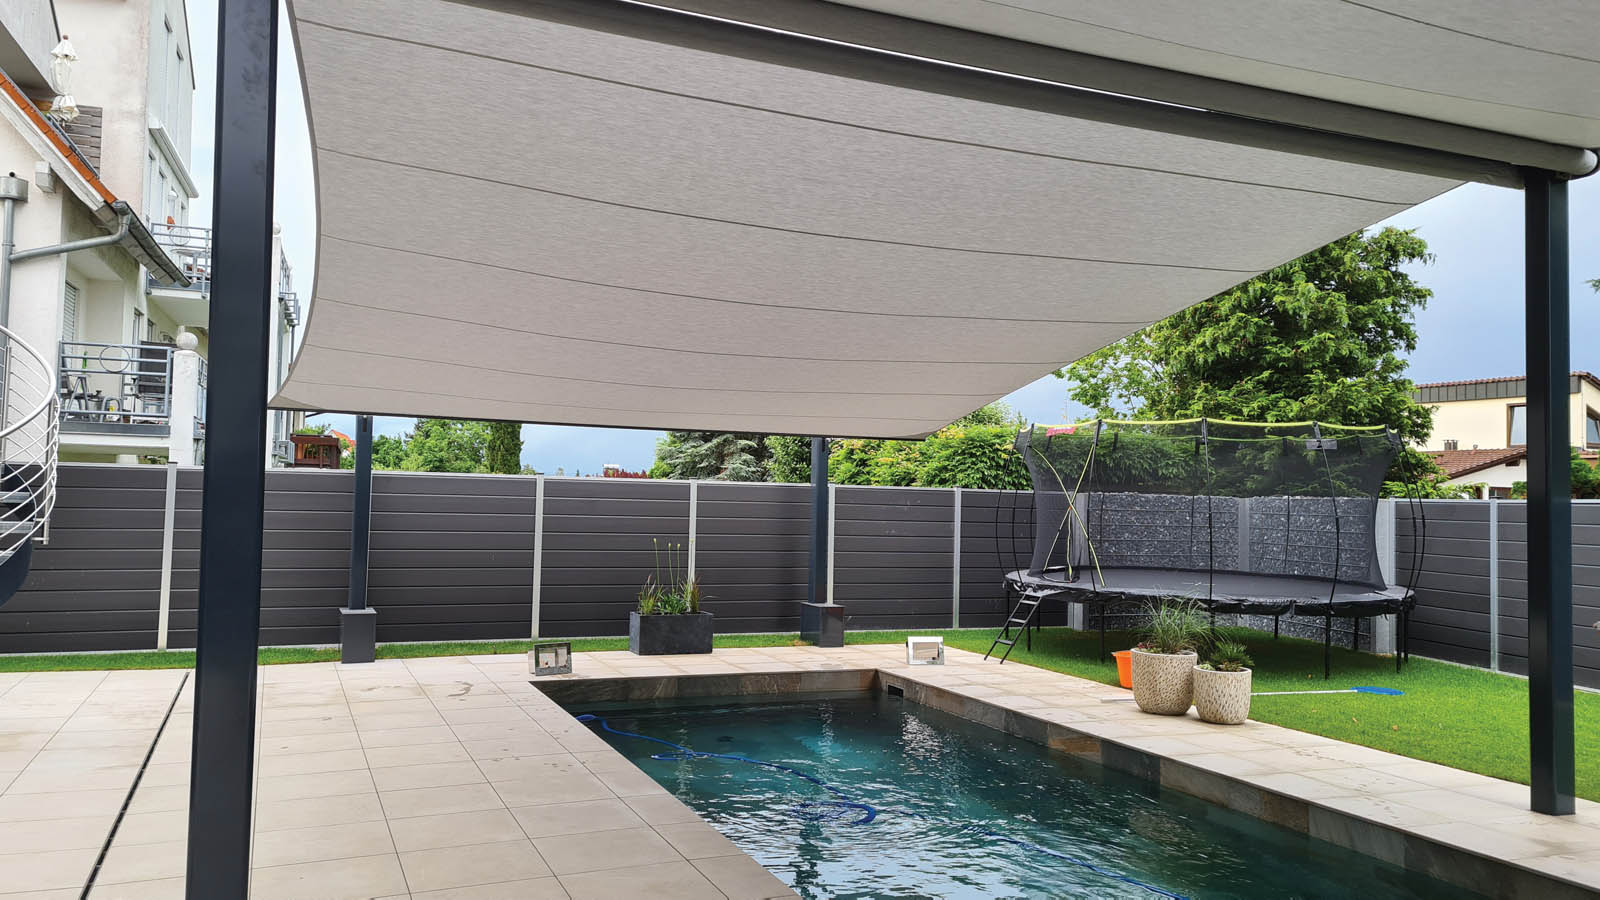 SunShield Retractable Canopy Image